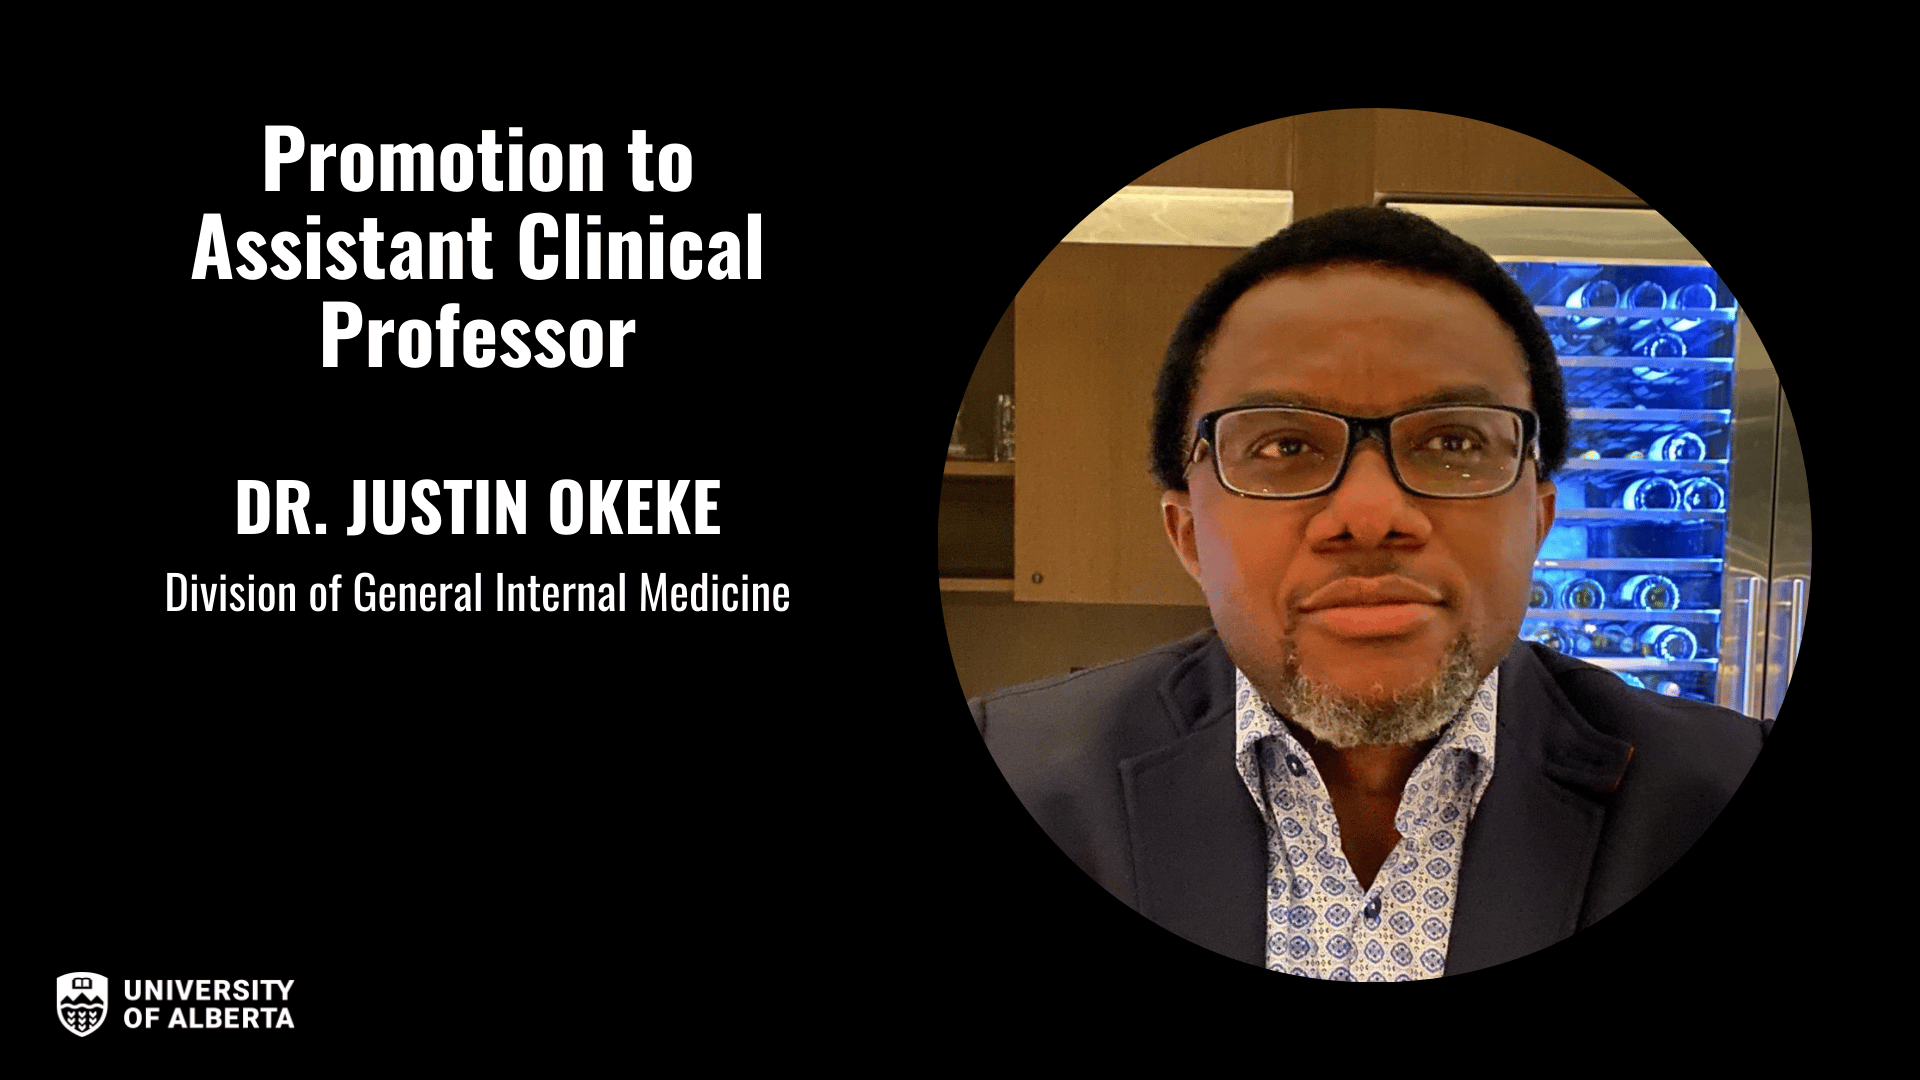 Dr. Justin Okeke